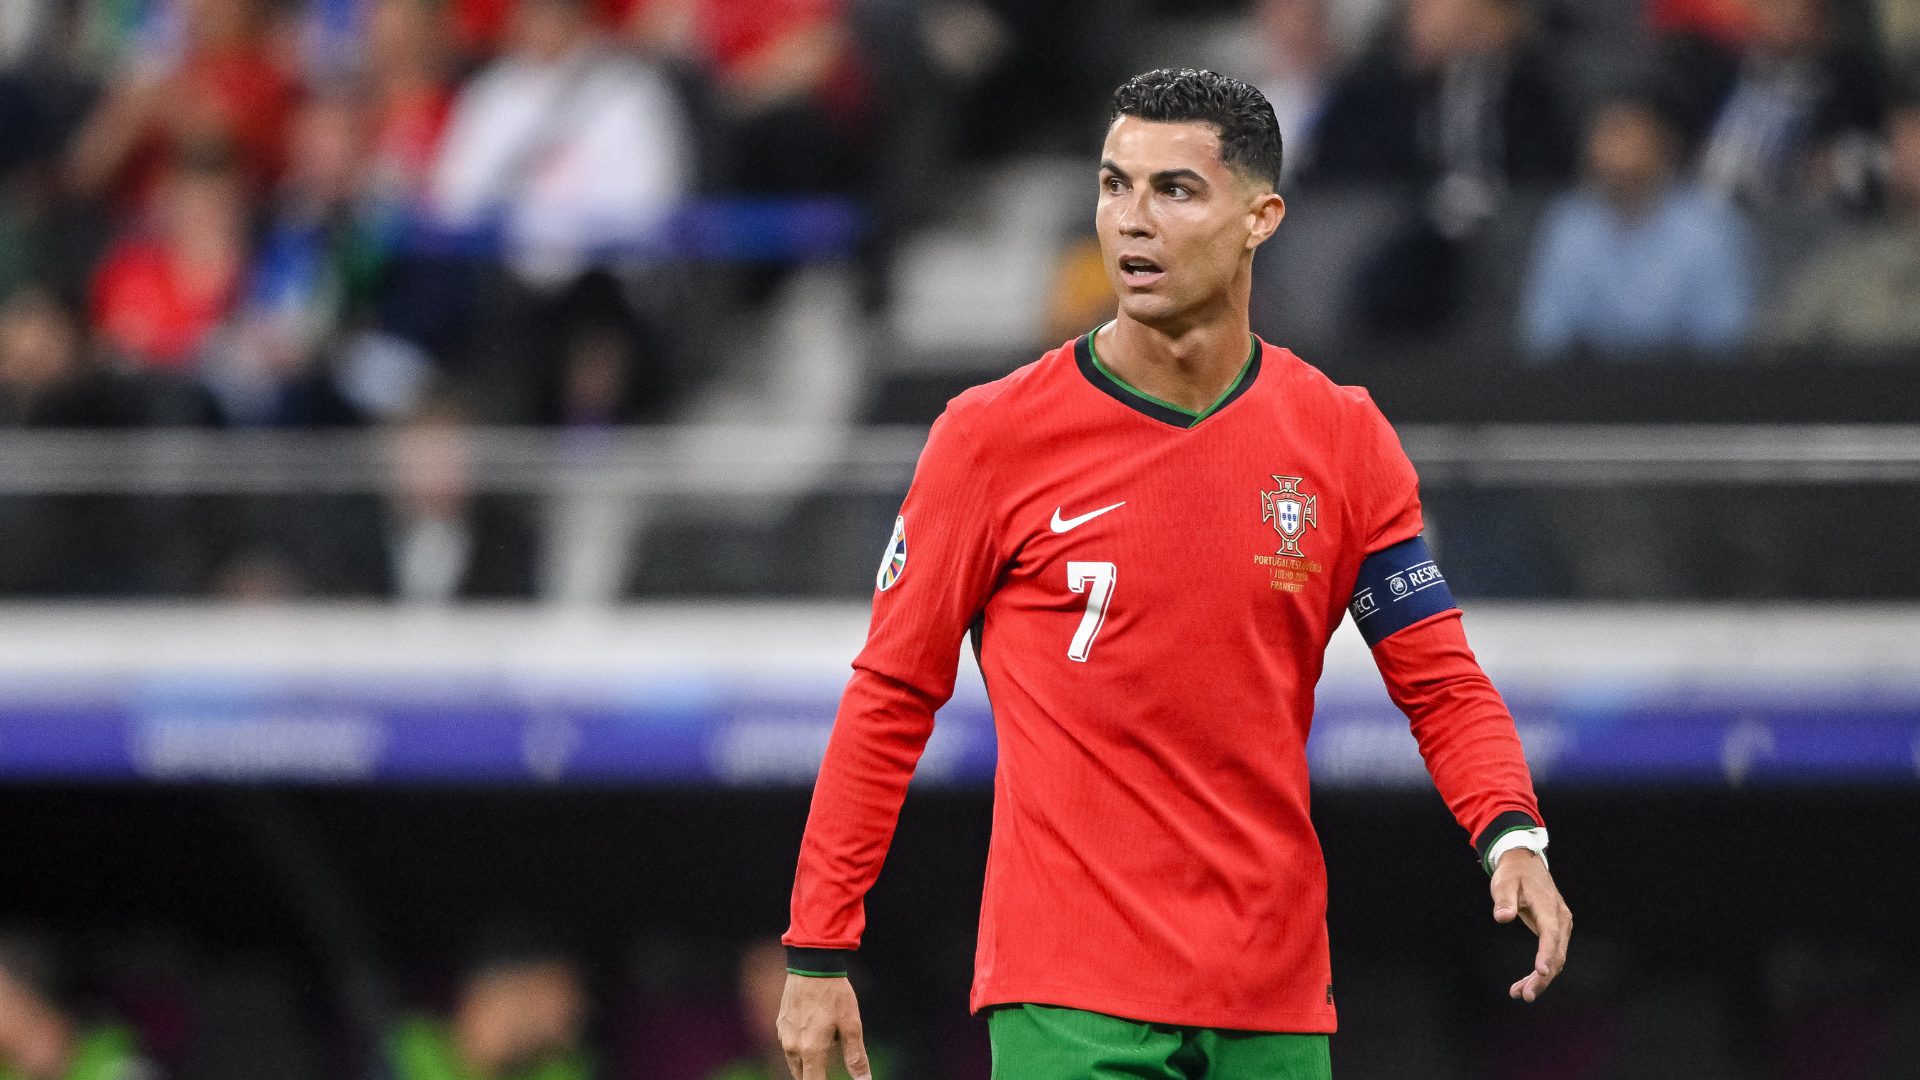 Brown praises Ronaldo's mentality